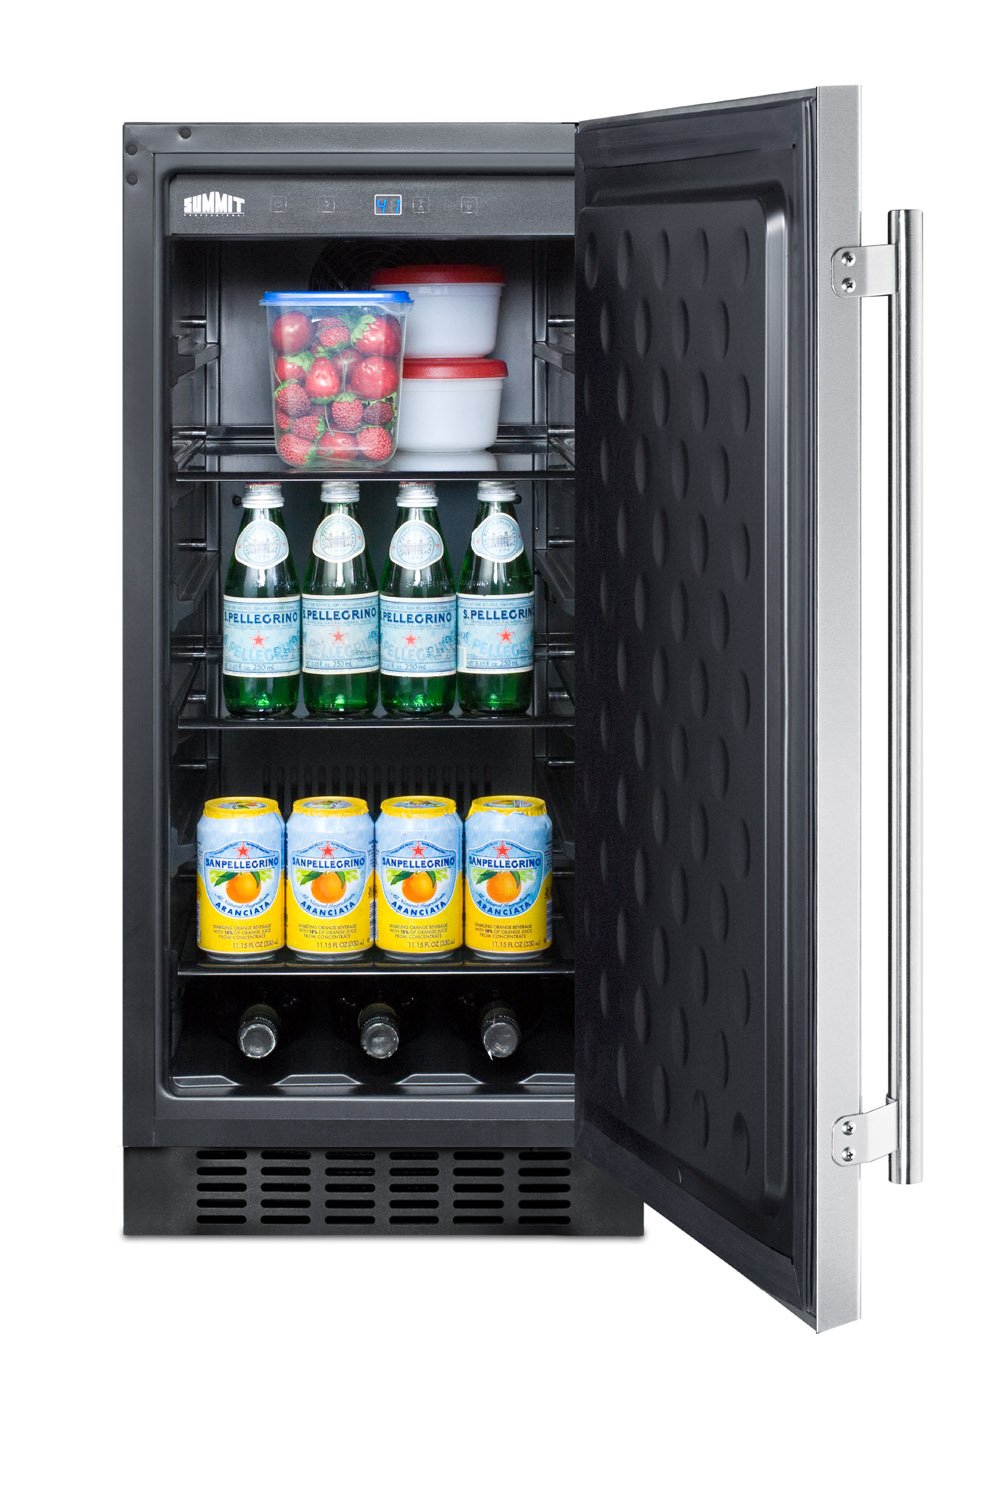 SUMMIT 15 in. Outdoor All-Refrigerator (SPR316OS)